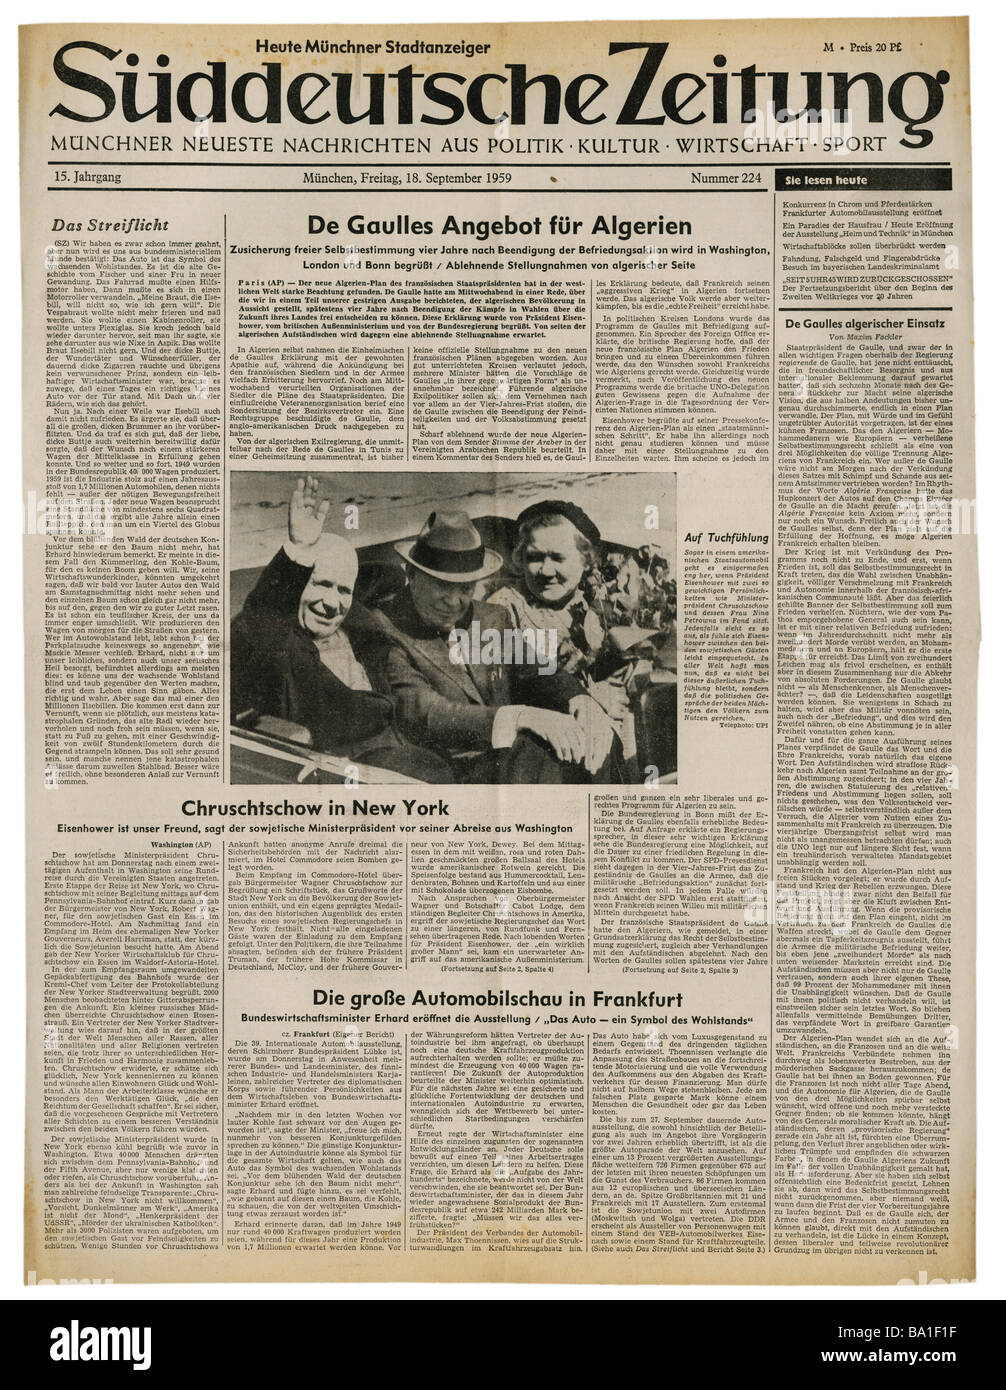 press/media, magazines, 'Süddeutsche Zeitung', Munich, 15 volume, number 224, Friday 18.9.1959, title, de Gaulle propsal for future of Algeria and Khrushchev visit in USA, Stock Photo